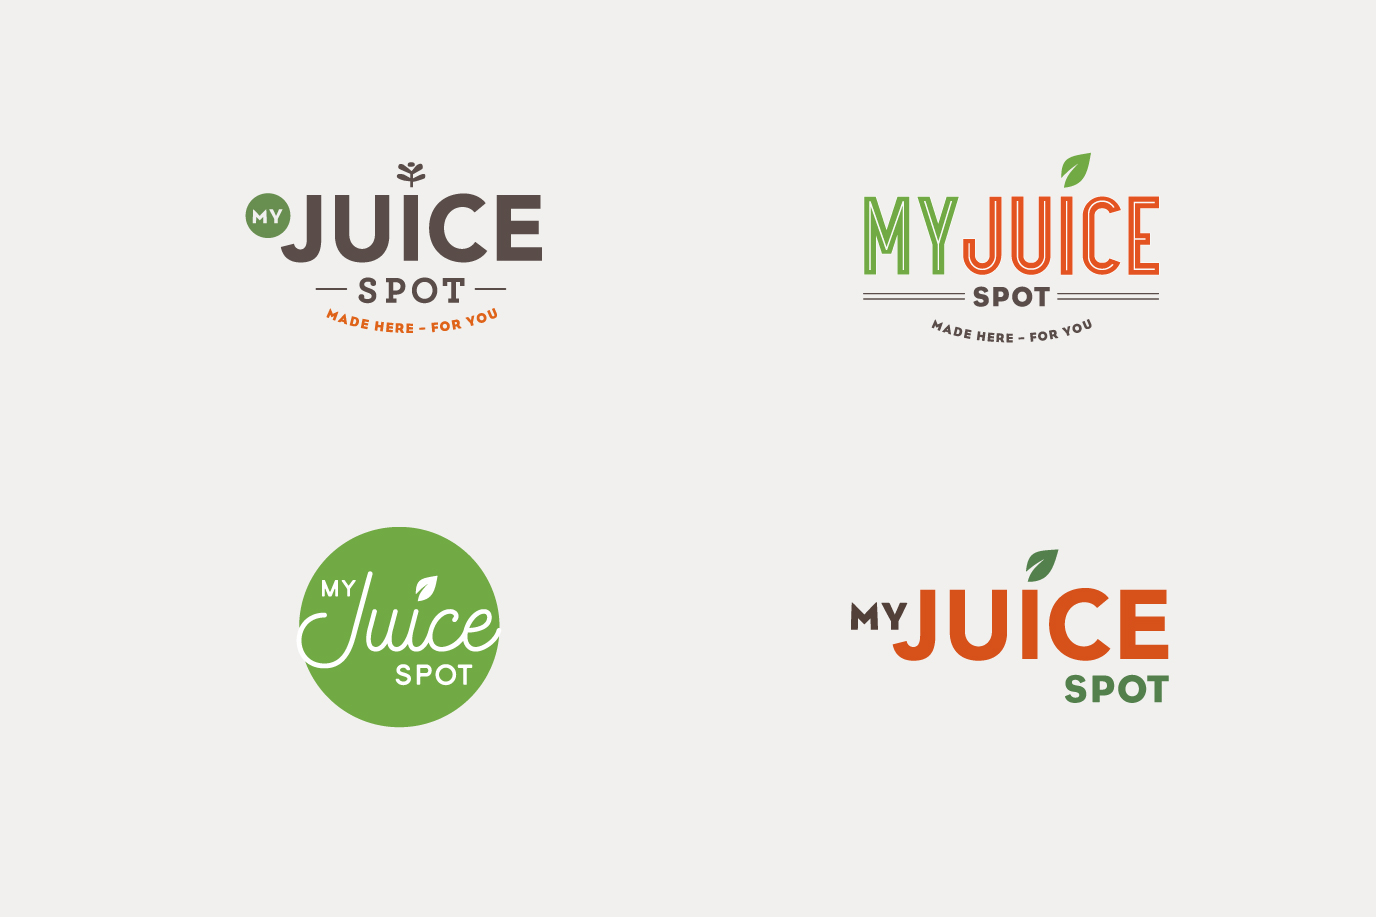 My Juice Spot Identity Concepts